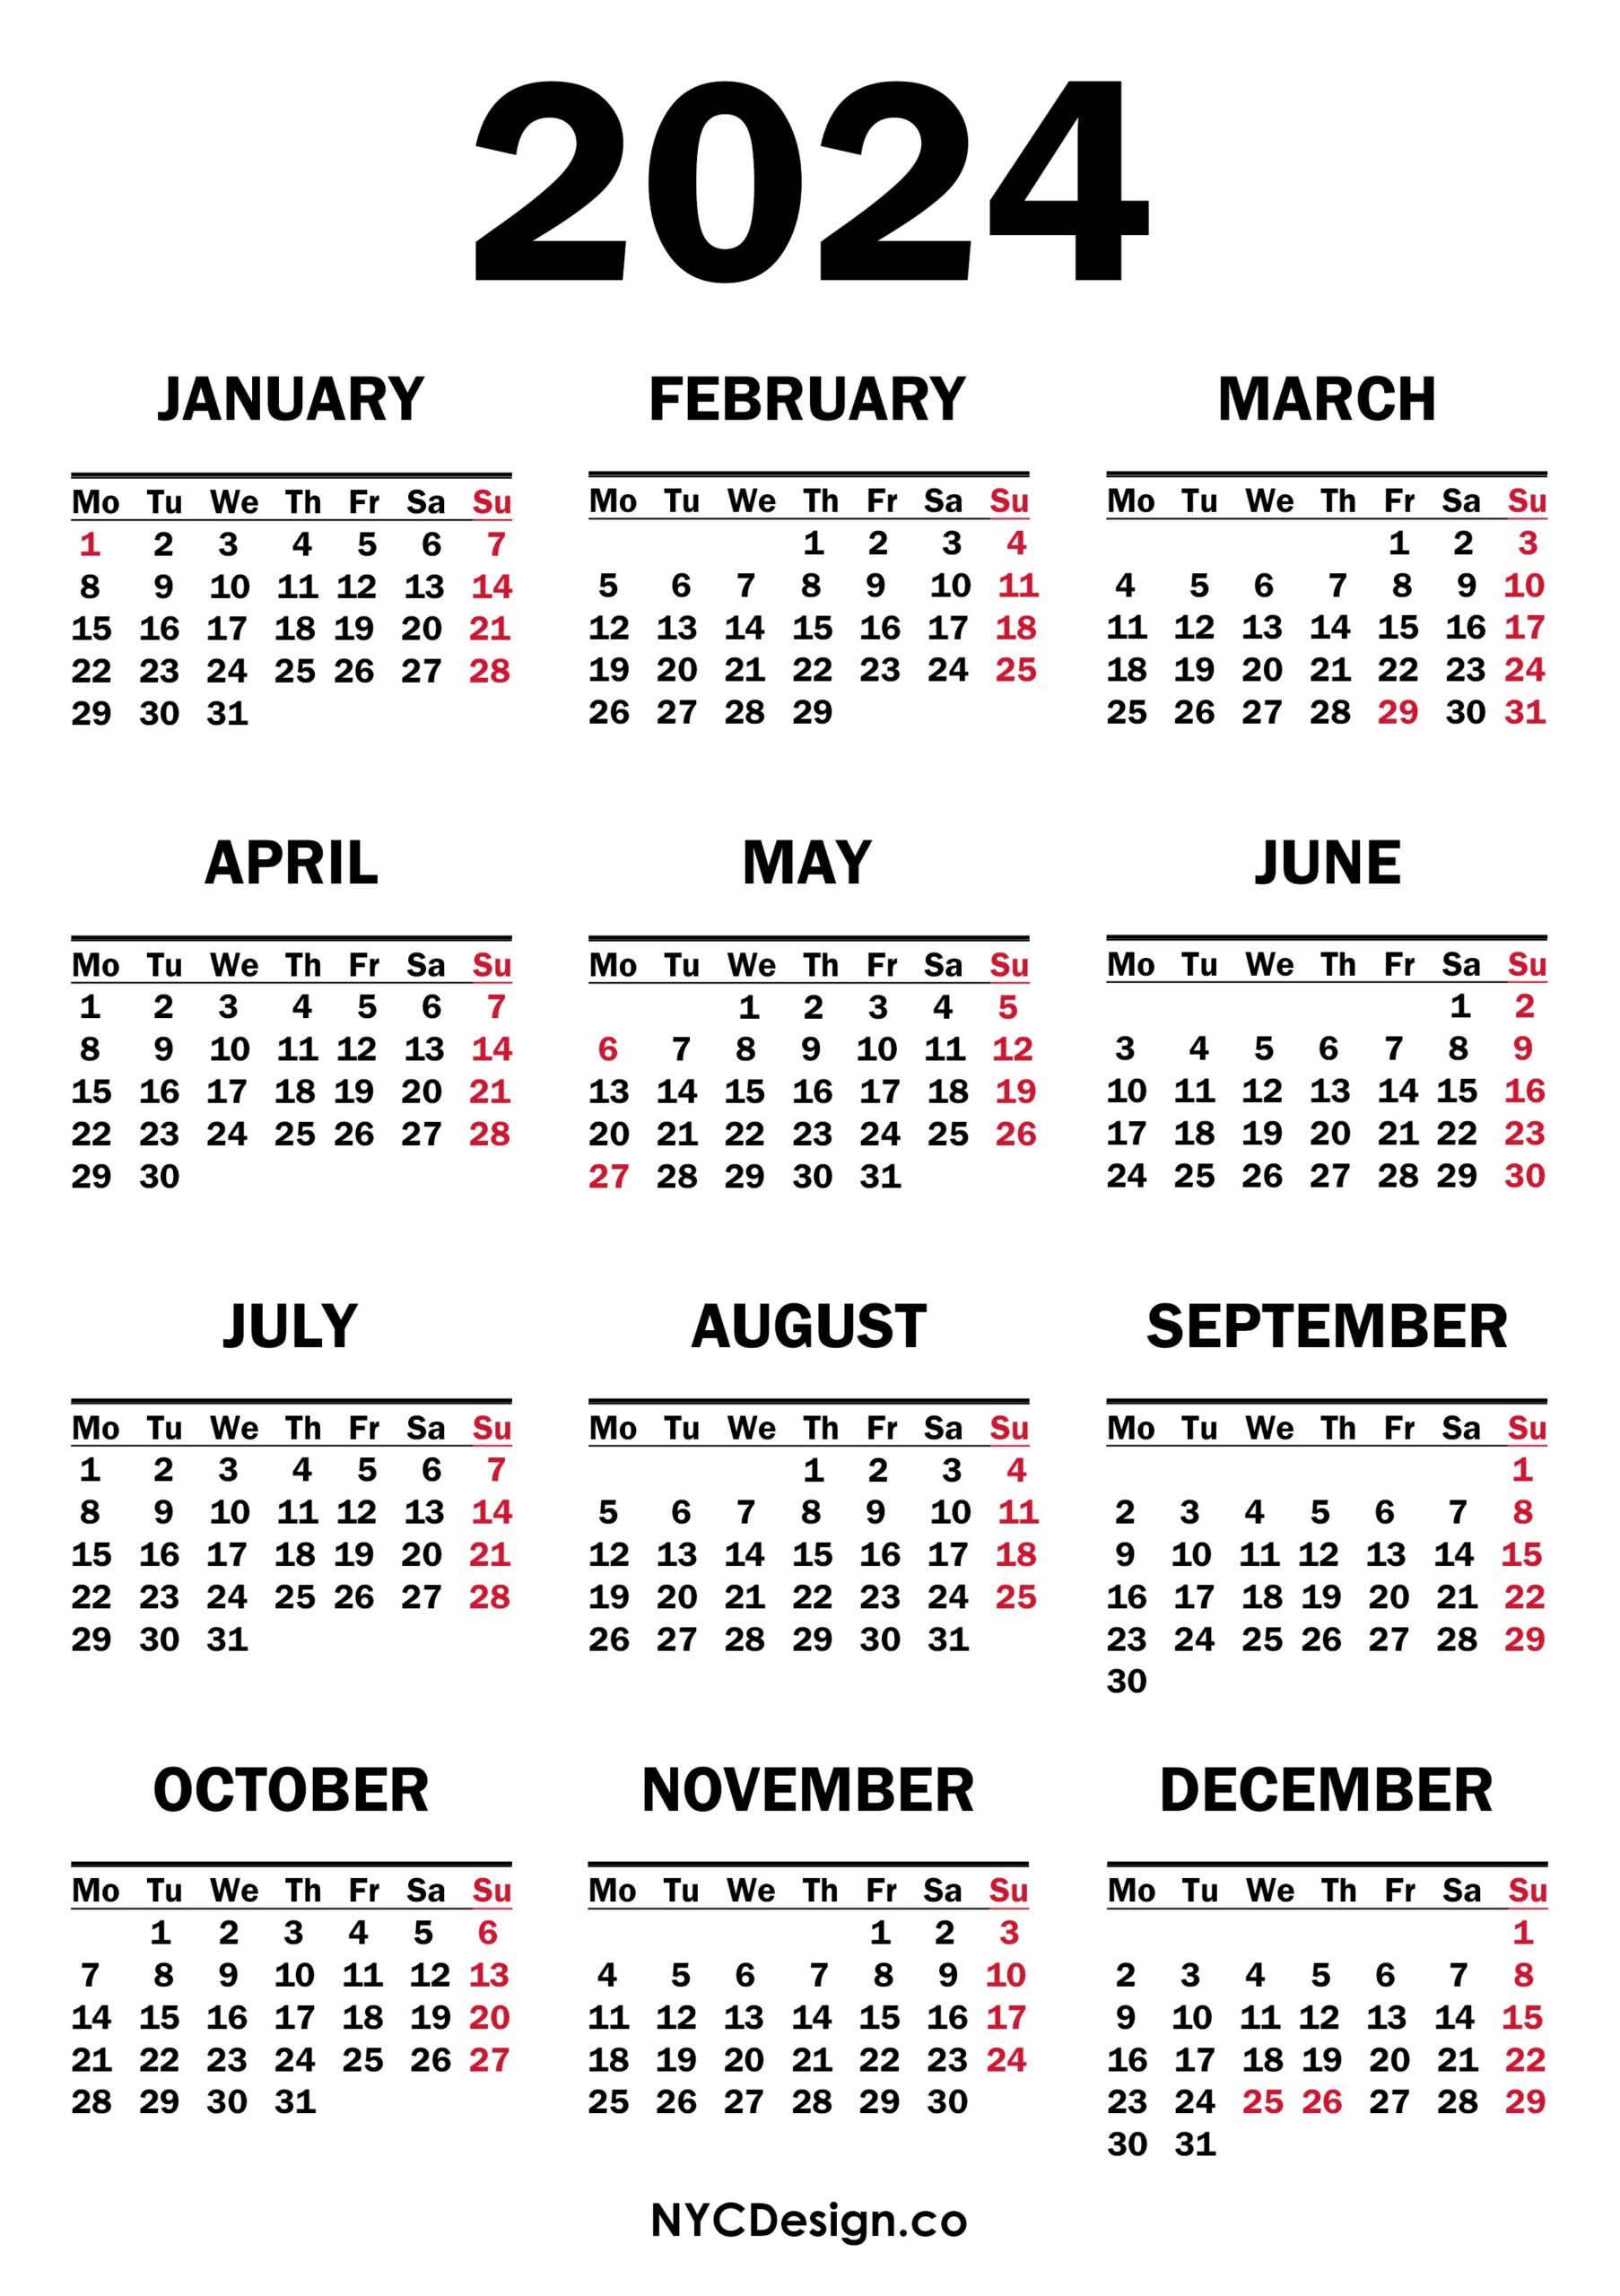 Free Printable 2024 Calendar With Holidays - Free Printable 2024 Calendar With Bank Holidays UK